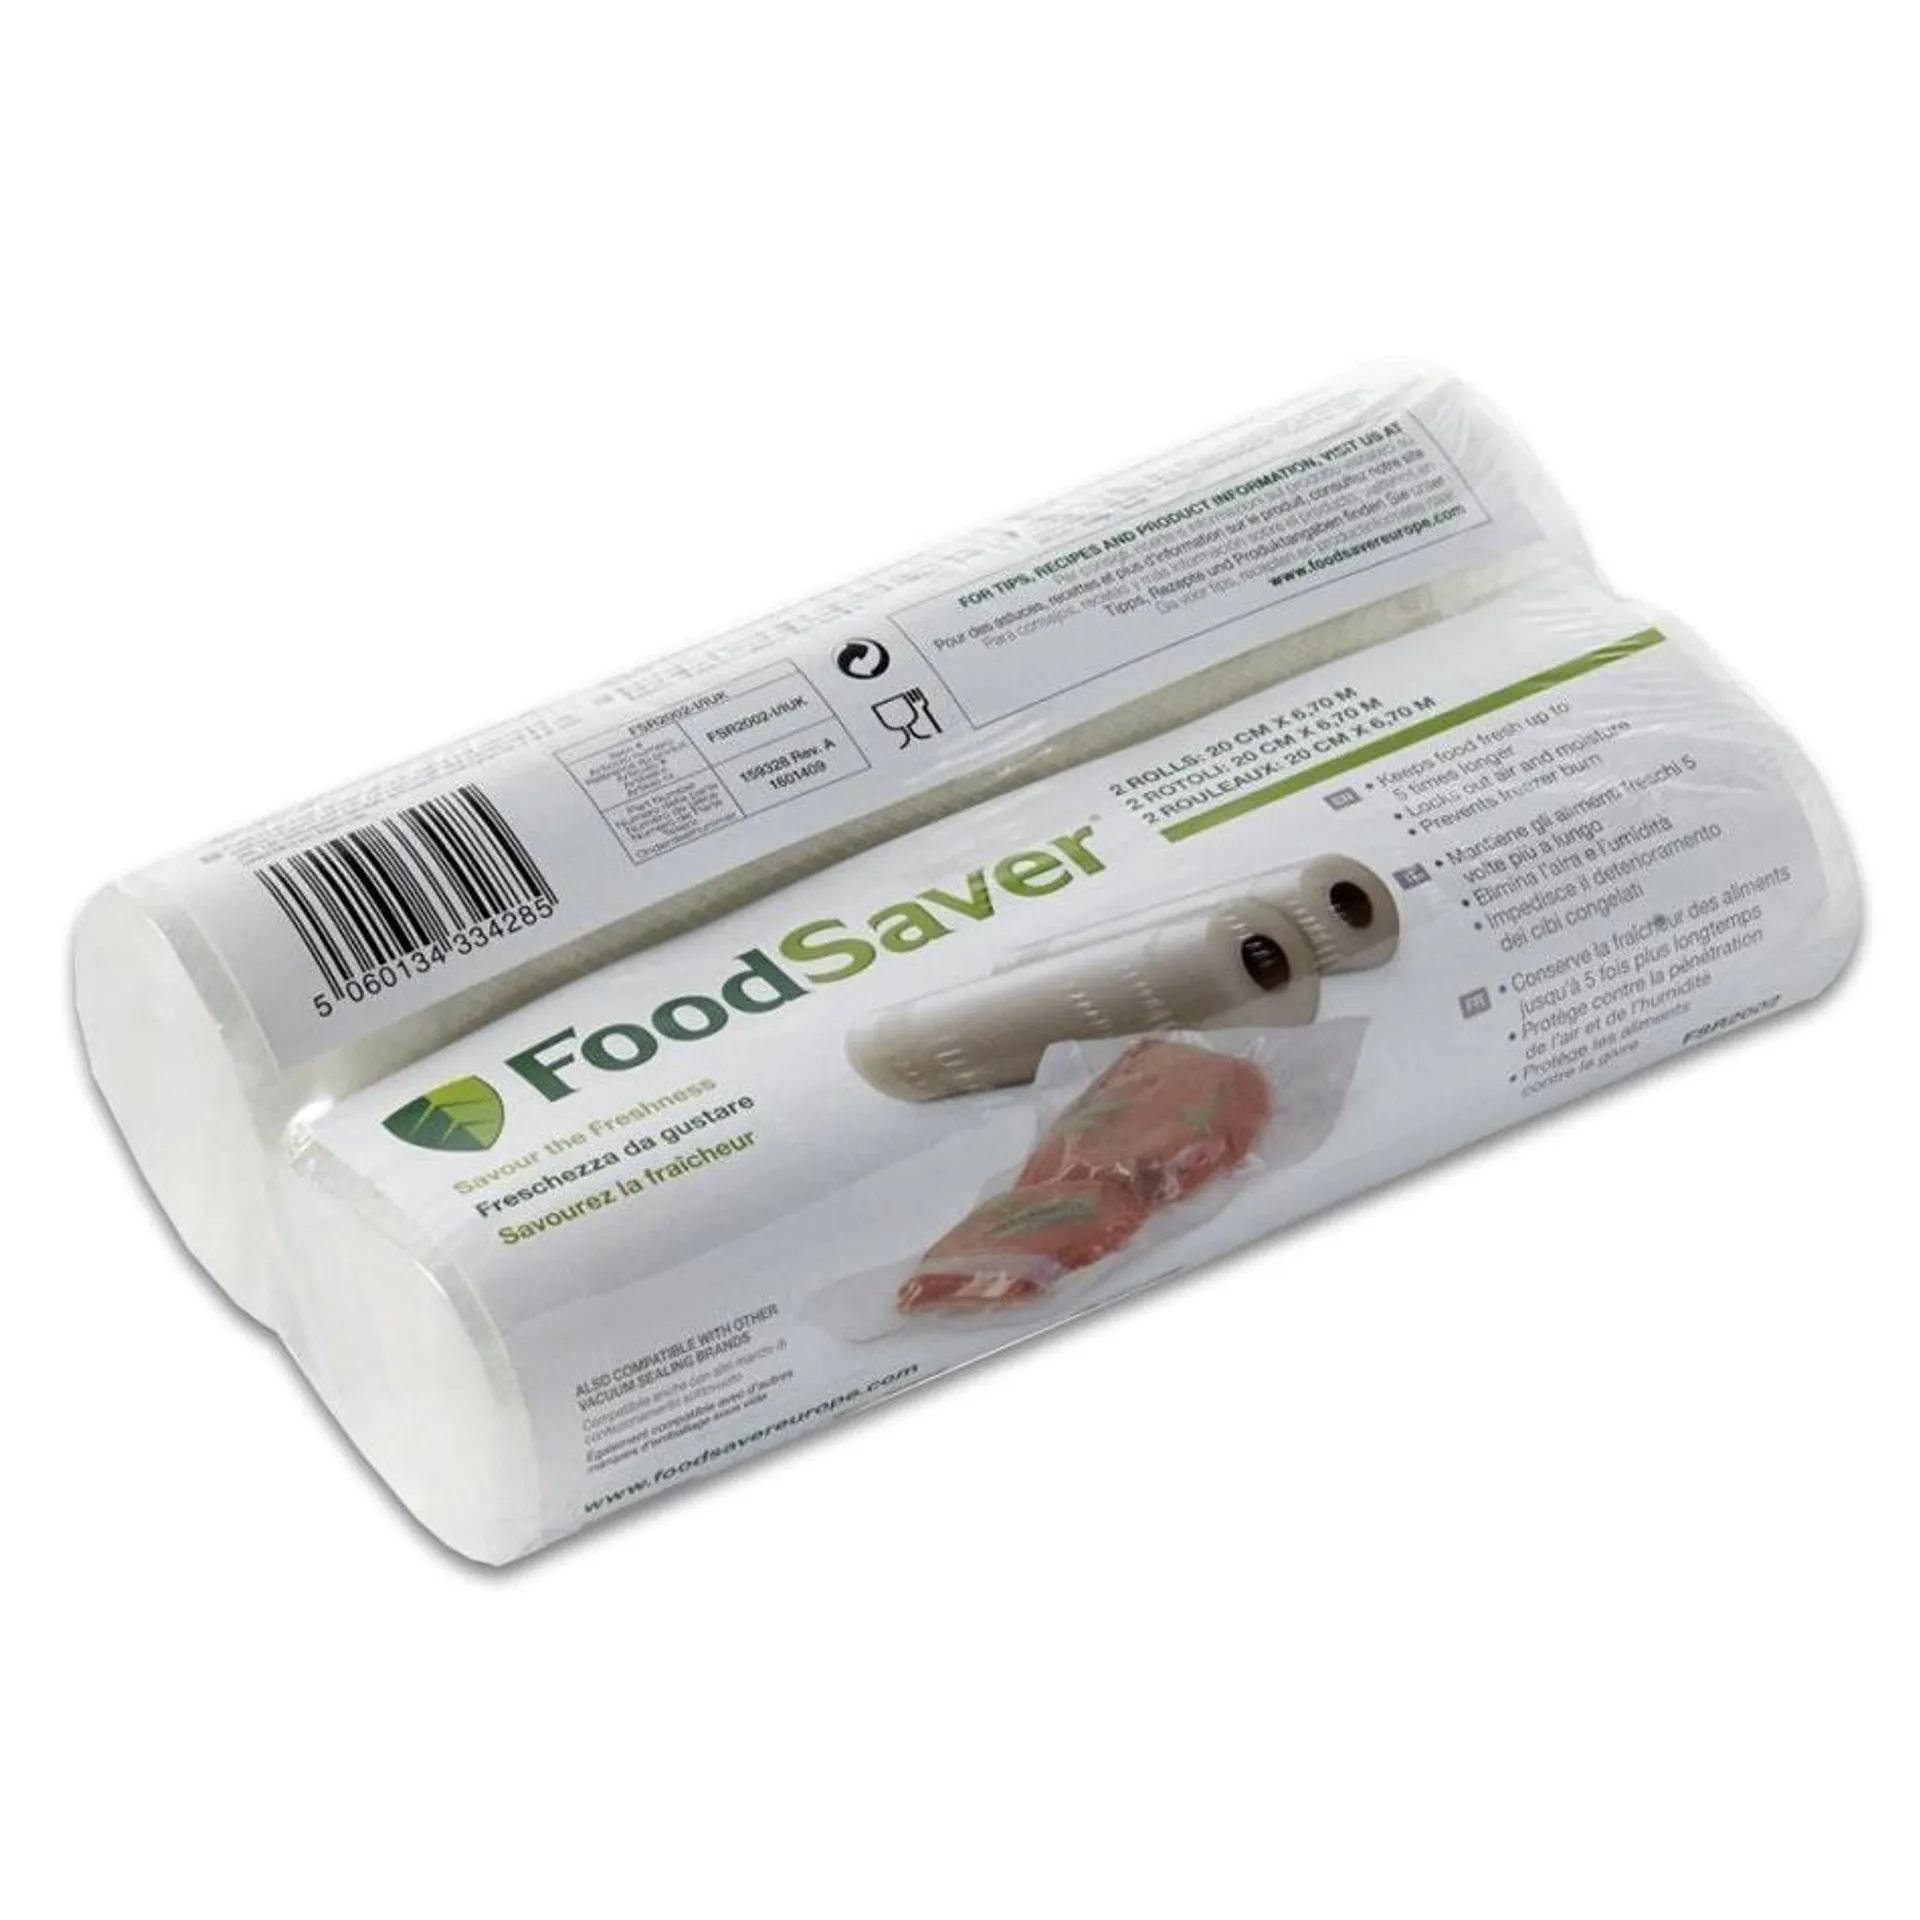 Pack 2 rollos envasar vacío Foodsaver ENV2860